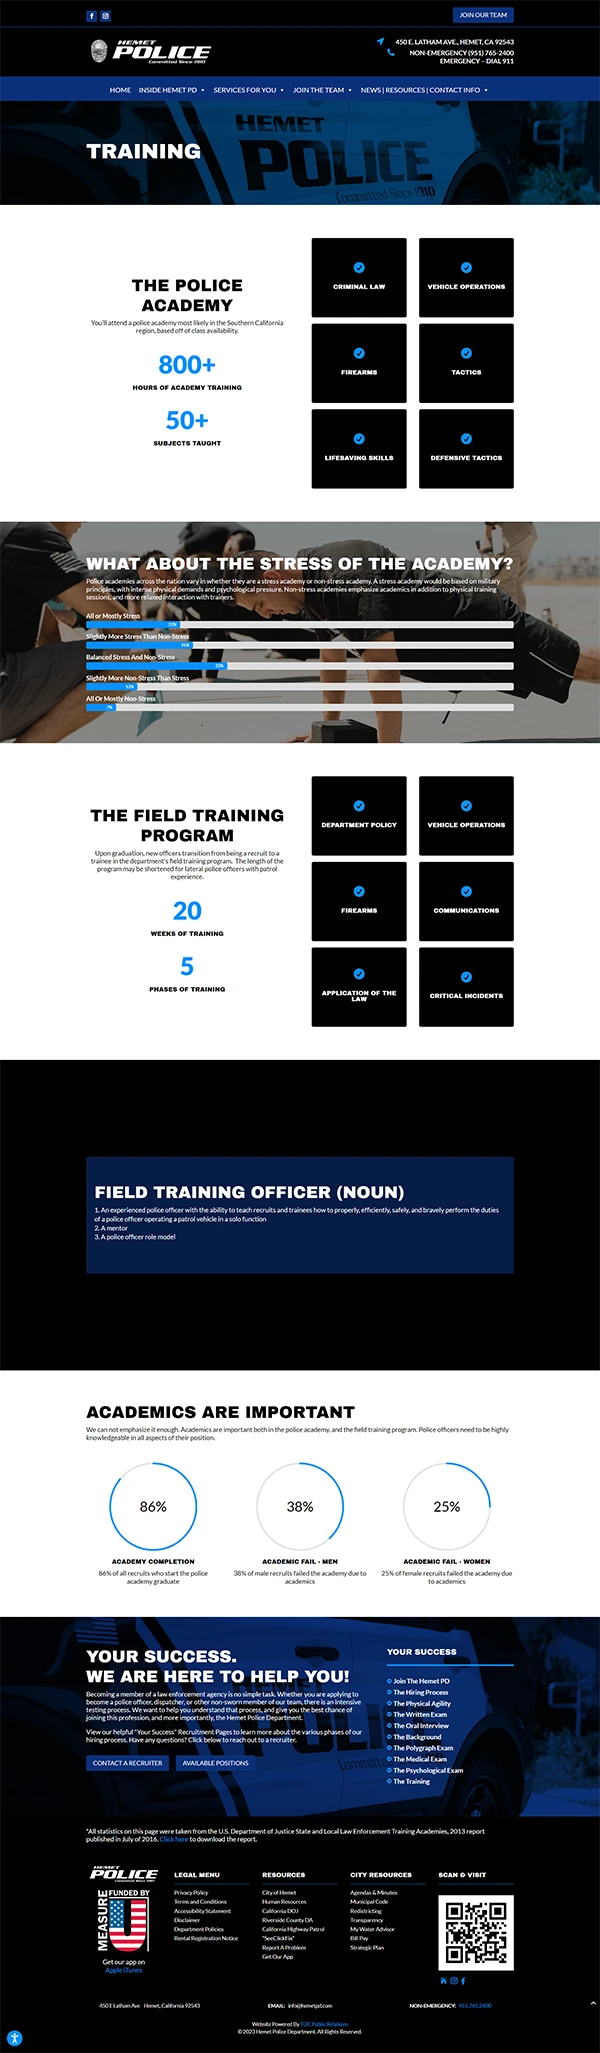 Hemet Police Department's Website Training Page